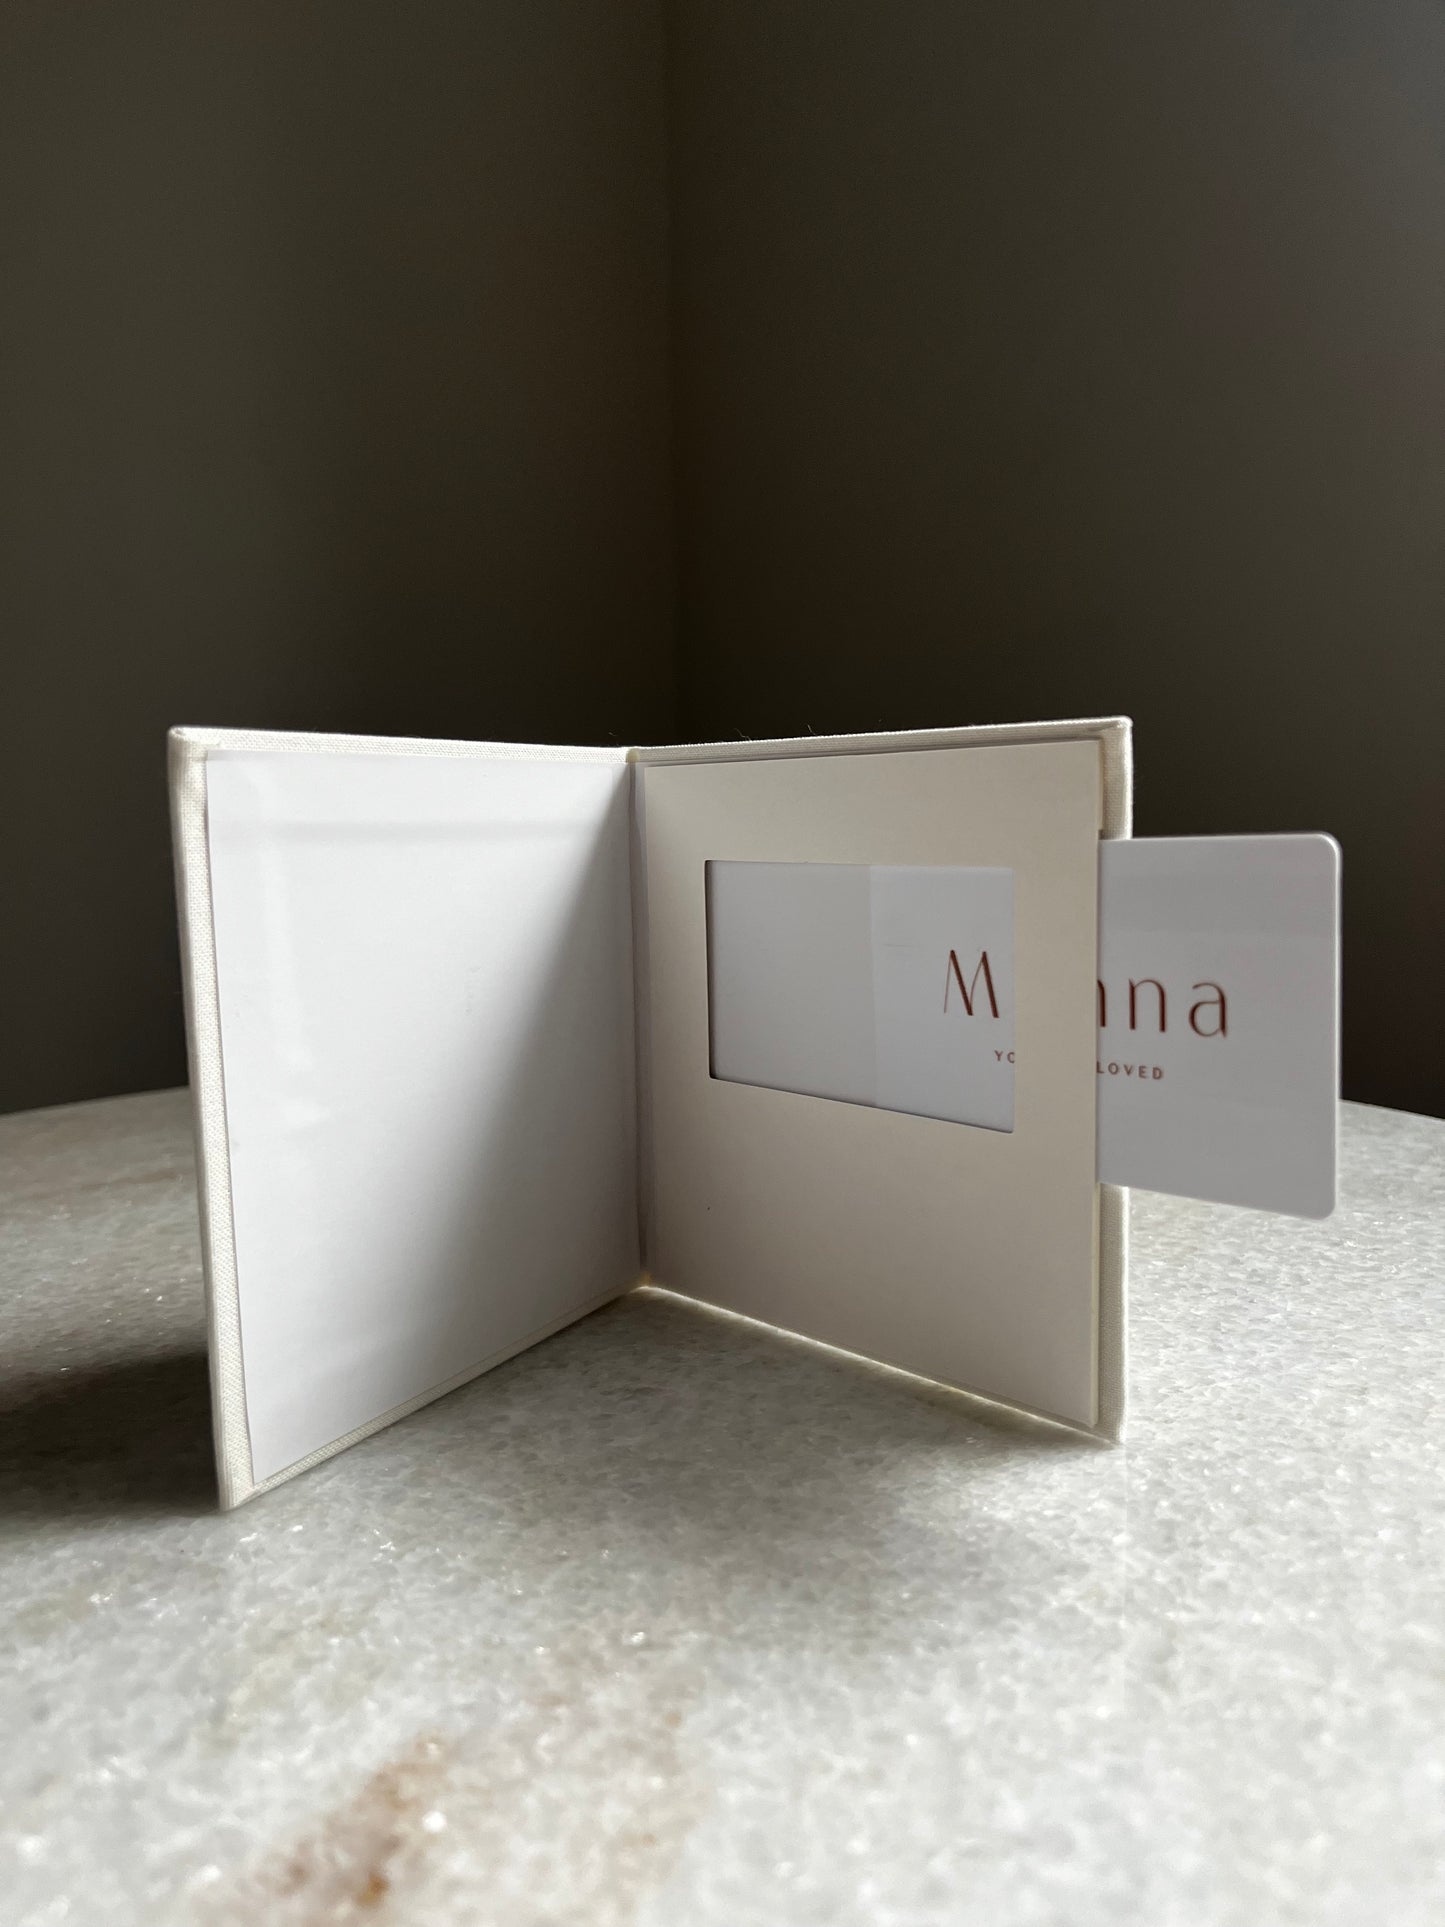 MINI Modern Gift Card Holder - Ivory White 'Celebrate'